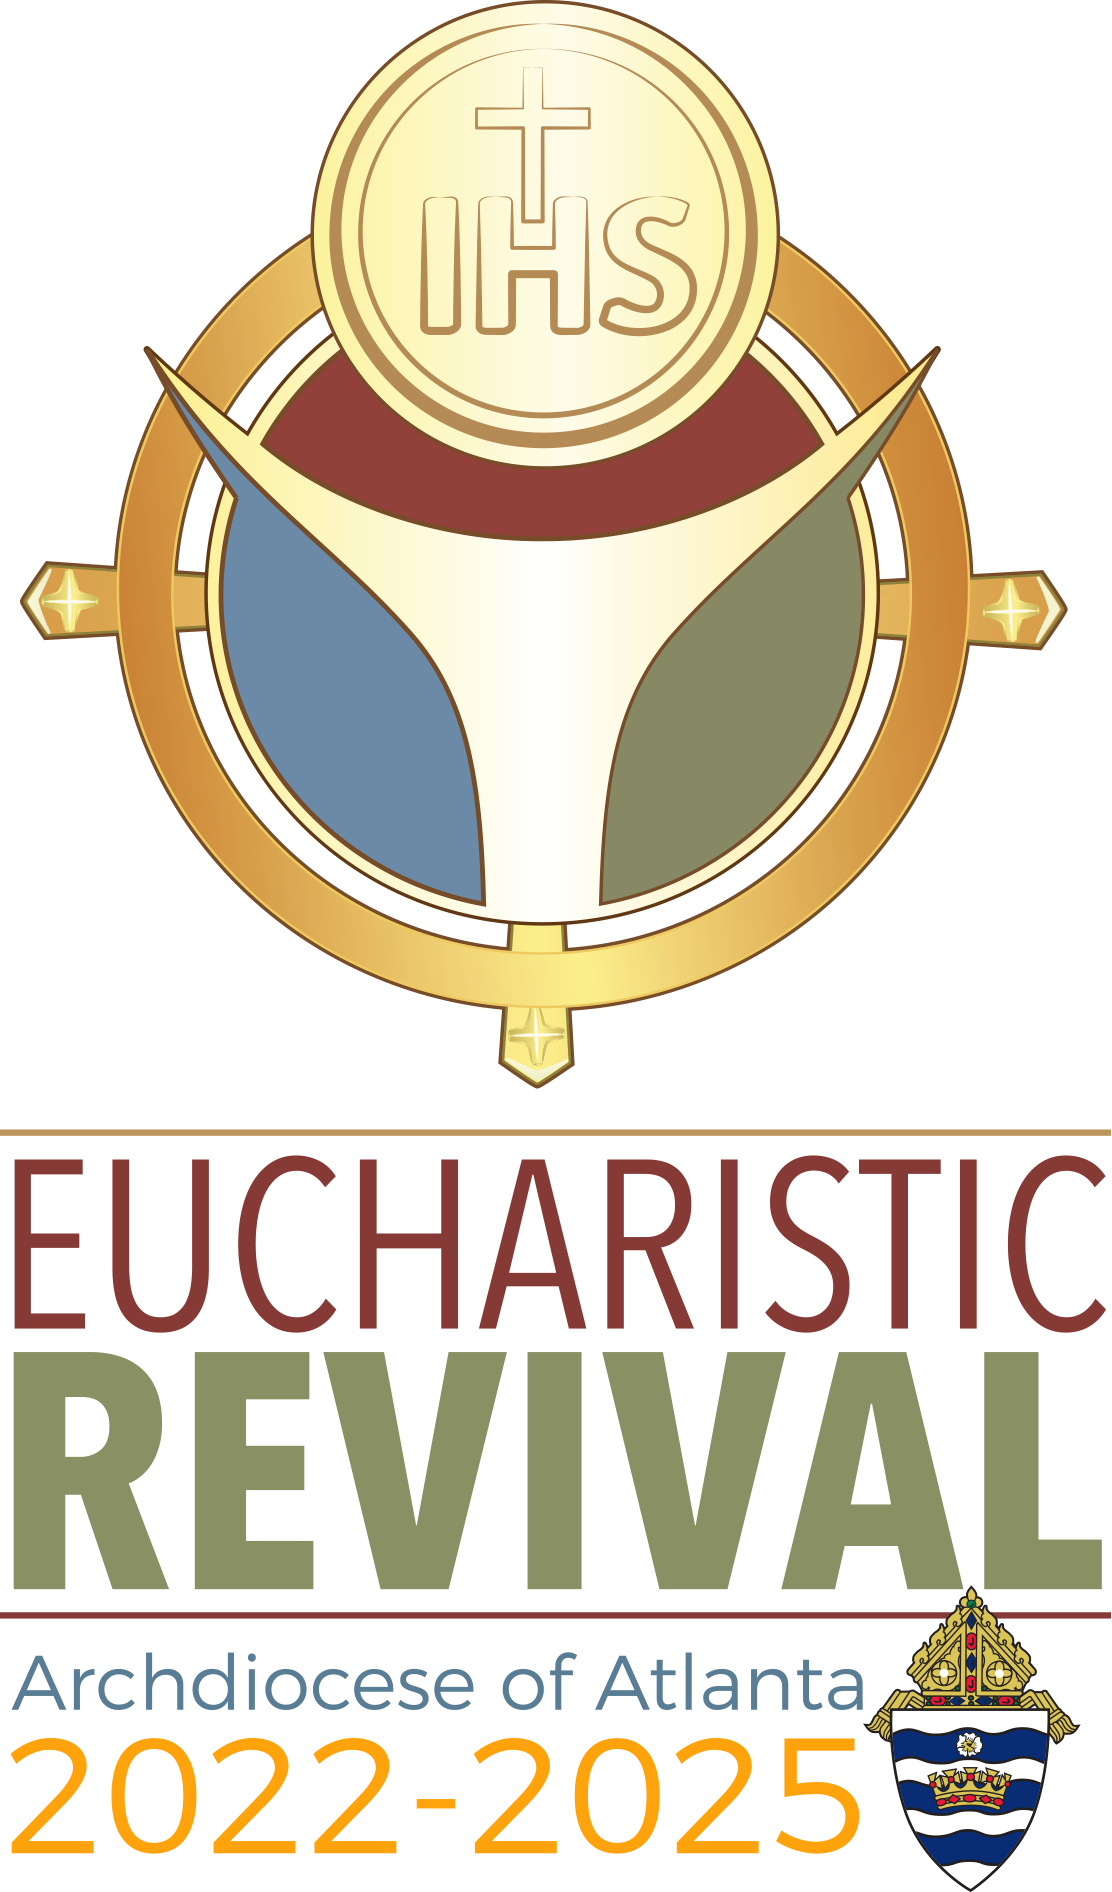 Eucharistic Revival Archdiocese of Atlanta 2022-2025